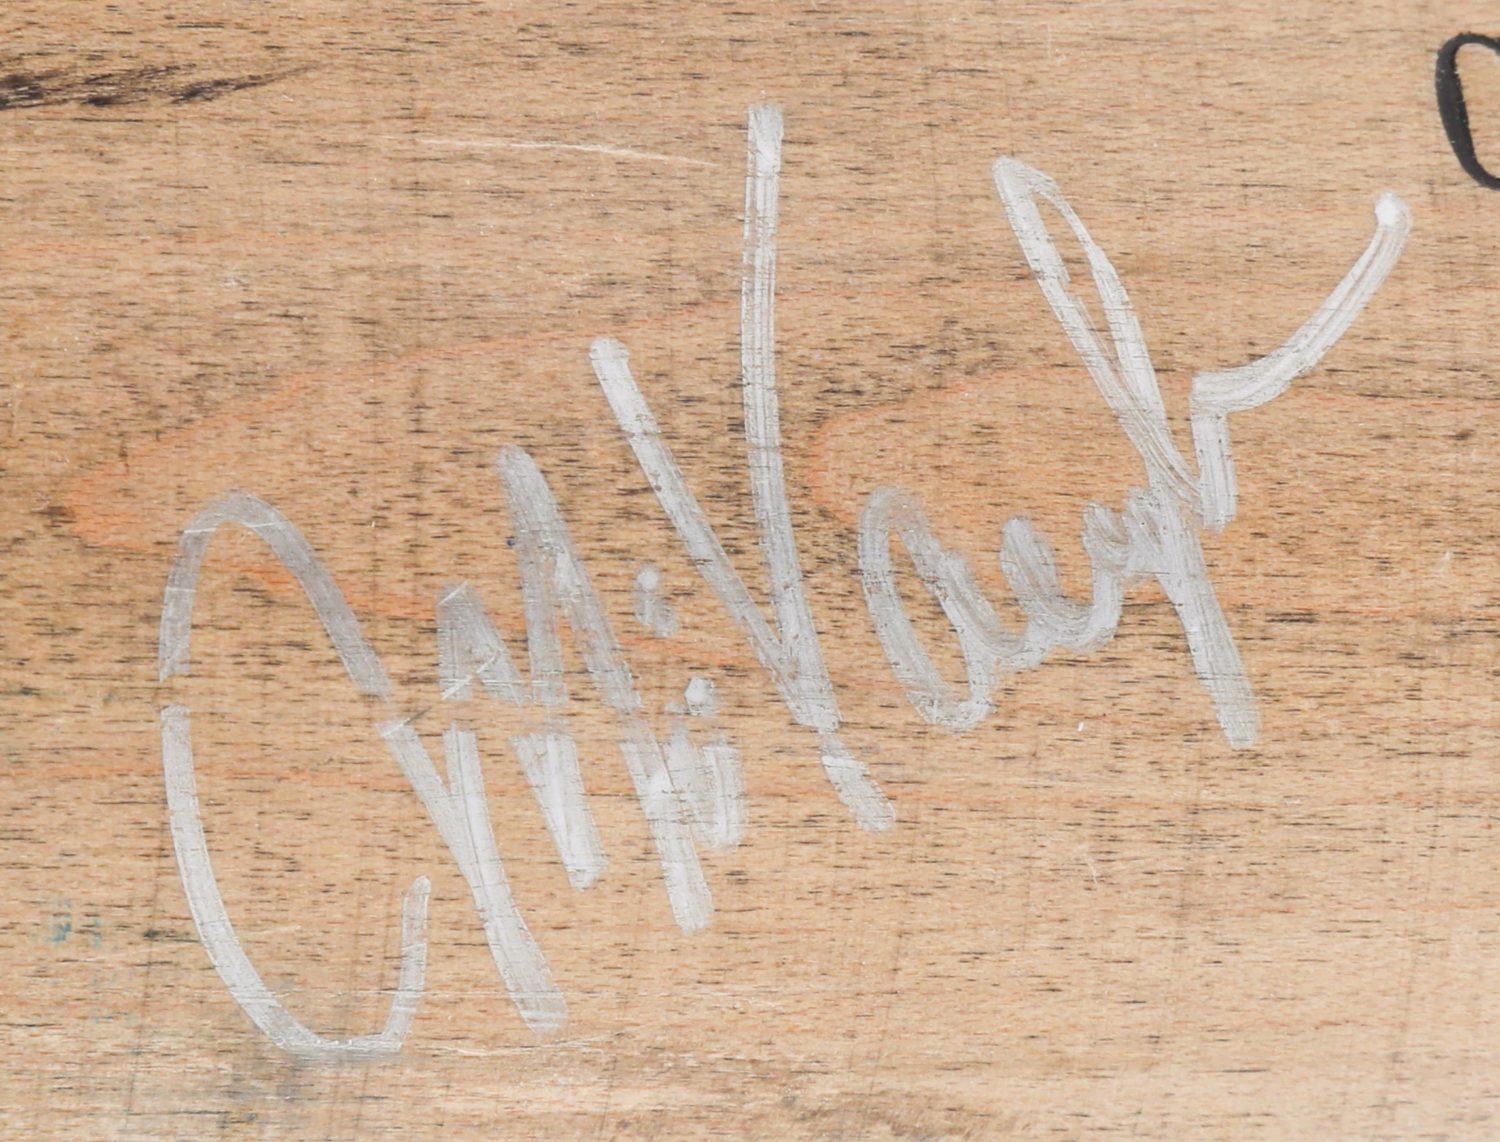 Mo Vaughn Cracked Autographed Baseball Bat - Autograph Detail